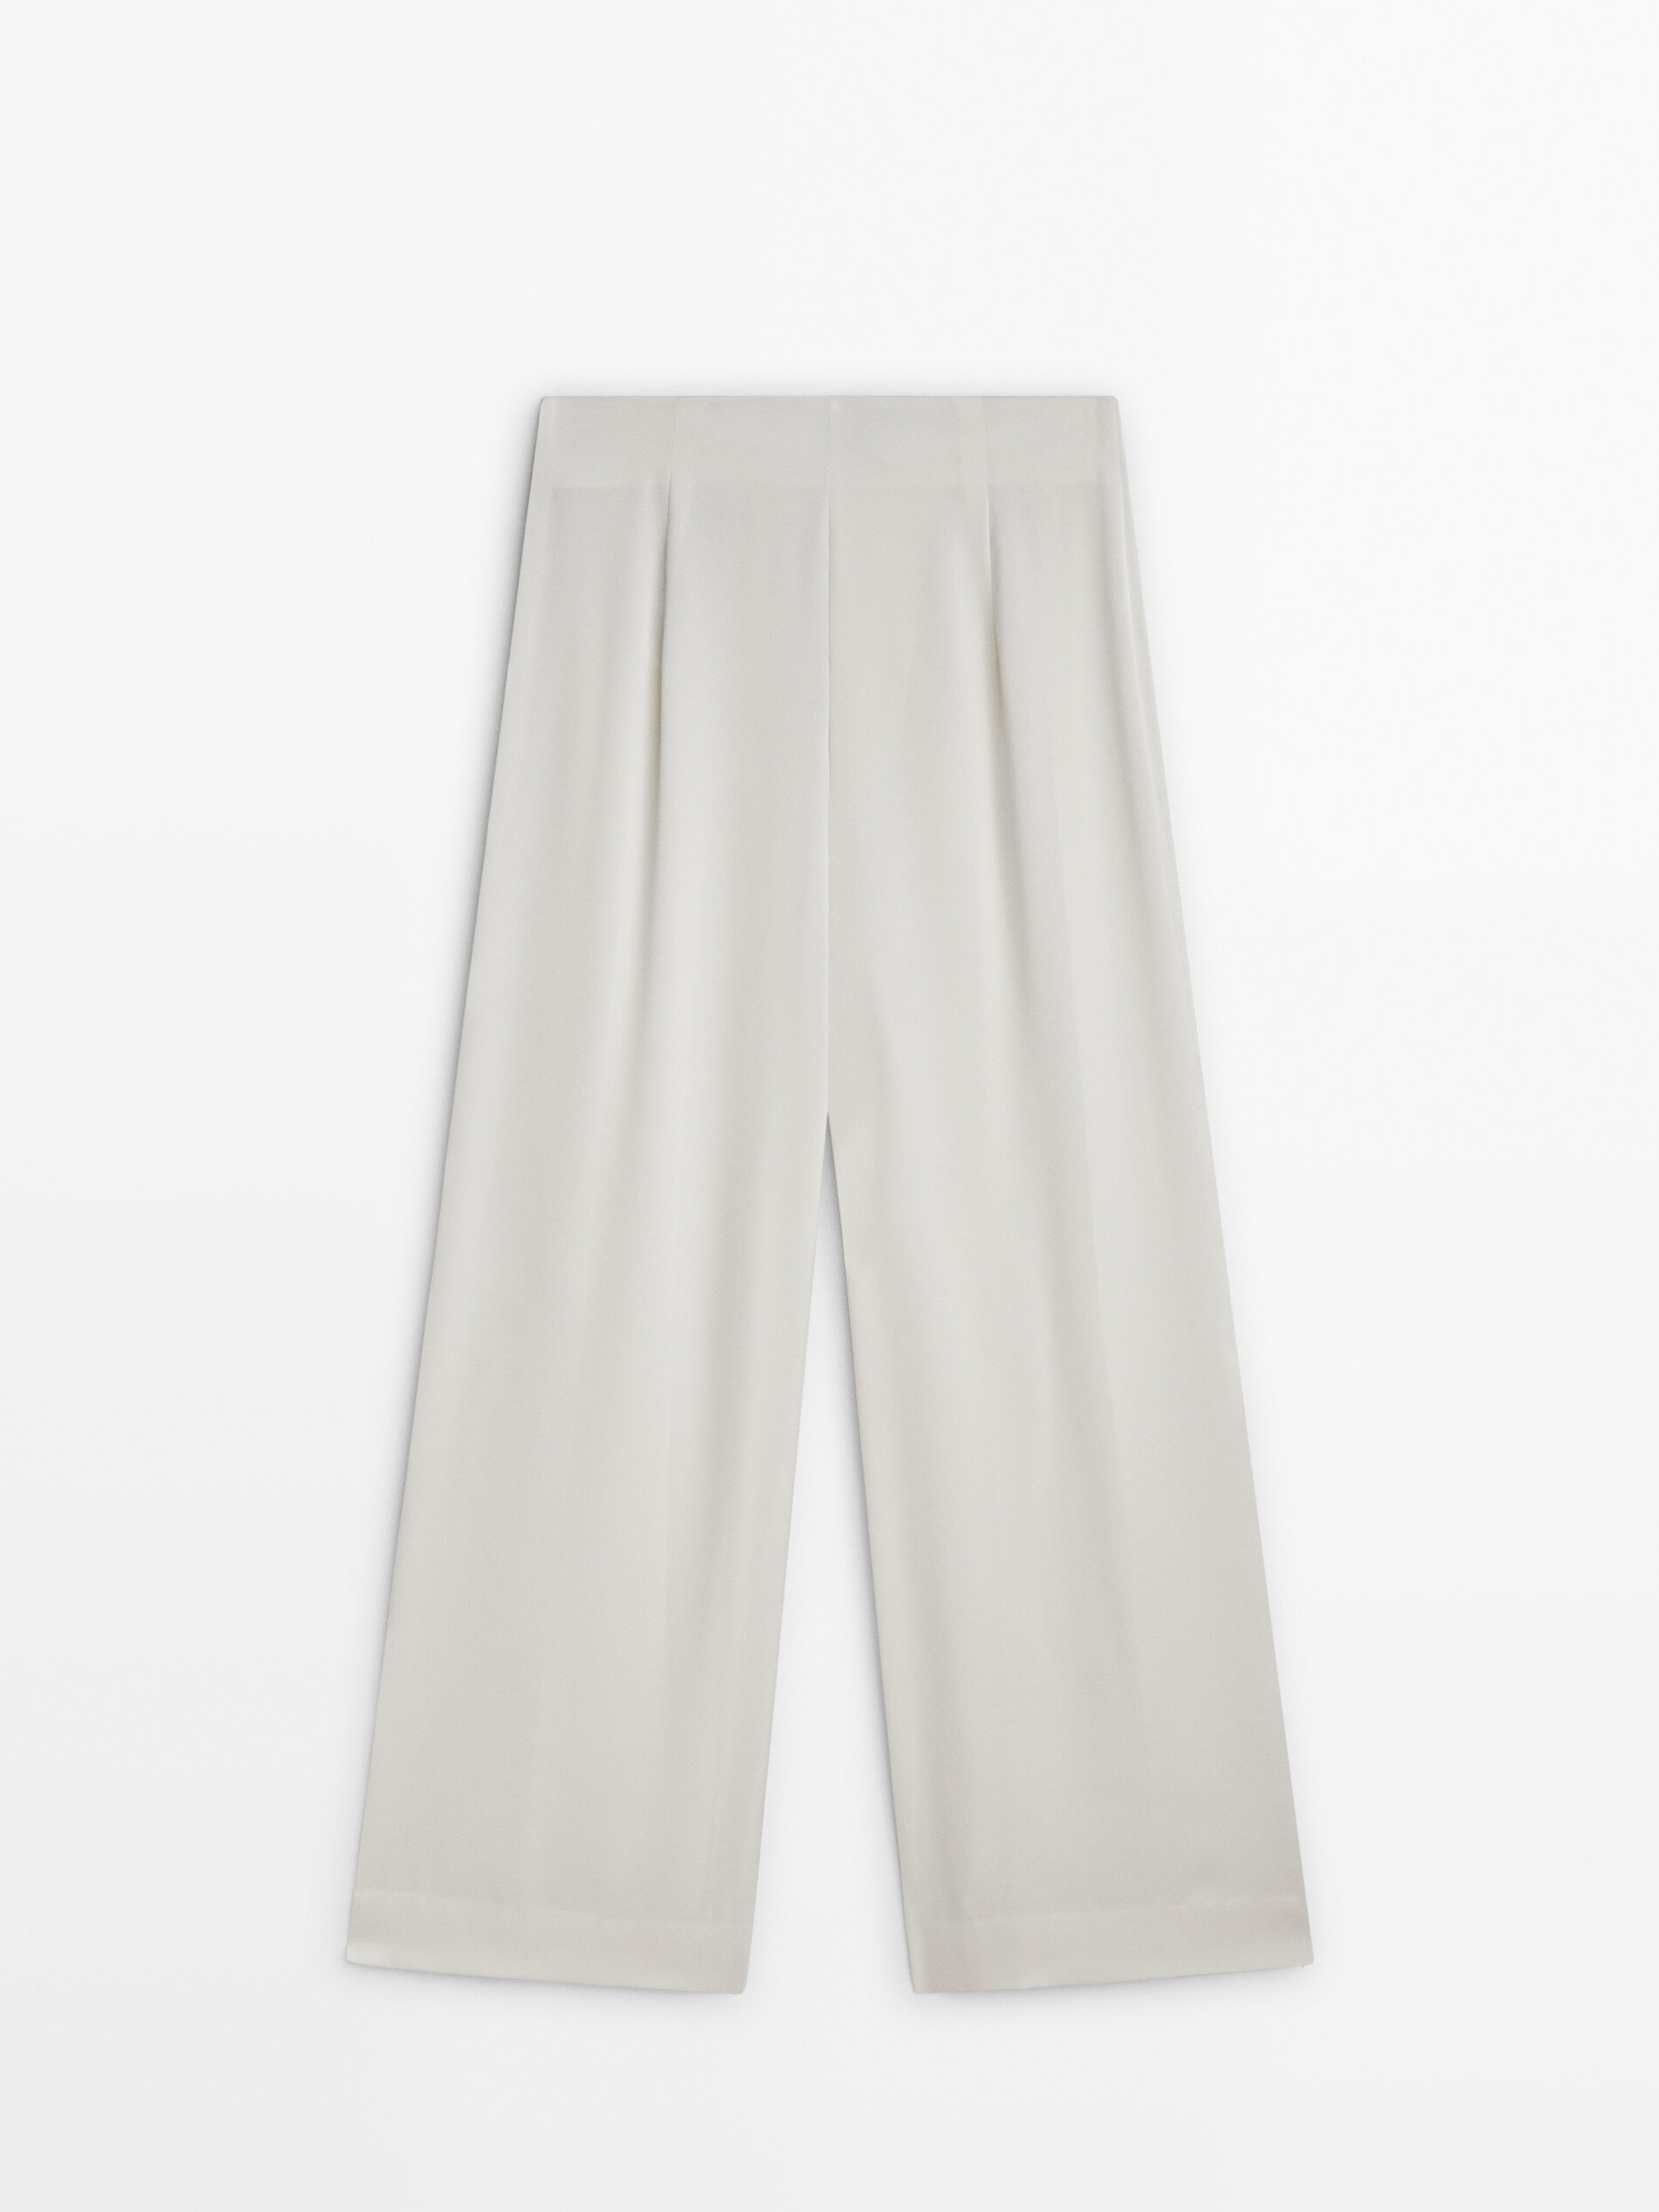 Lululemon City Sleek 5 Pocket Wide-leg High Rise 7/8 Length Pants